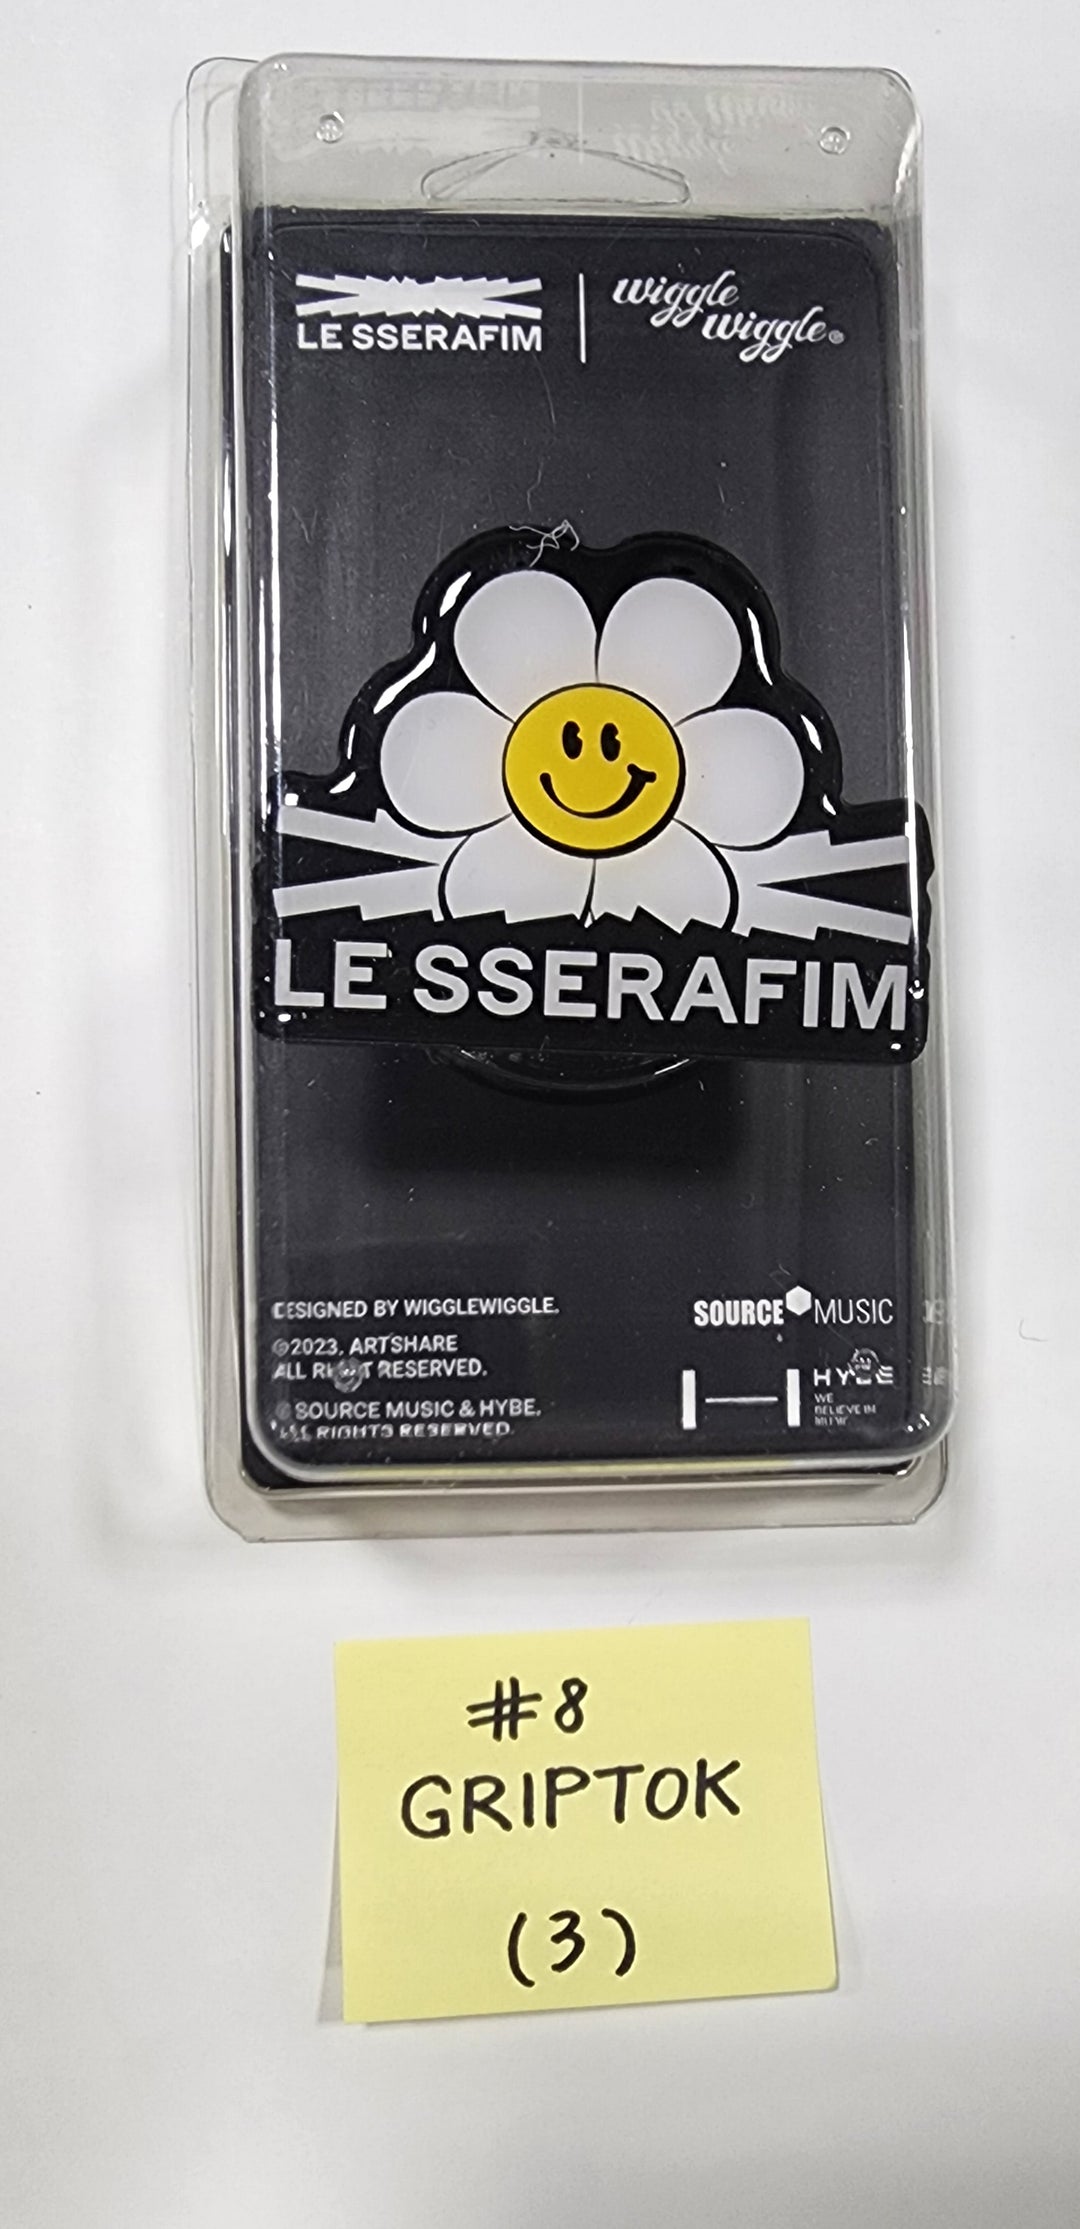 Le Sserafim - 2023 S/S Pop-up Store MD [Badge, Bag, Photocard & Tin case Set, Masking Tape Set, 4 Cuts Photo Set, Lenticular Photo set, Light Stick] [Restocked 8/7]